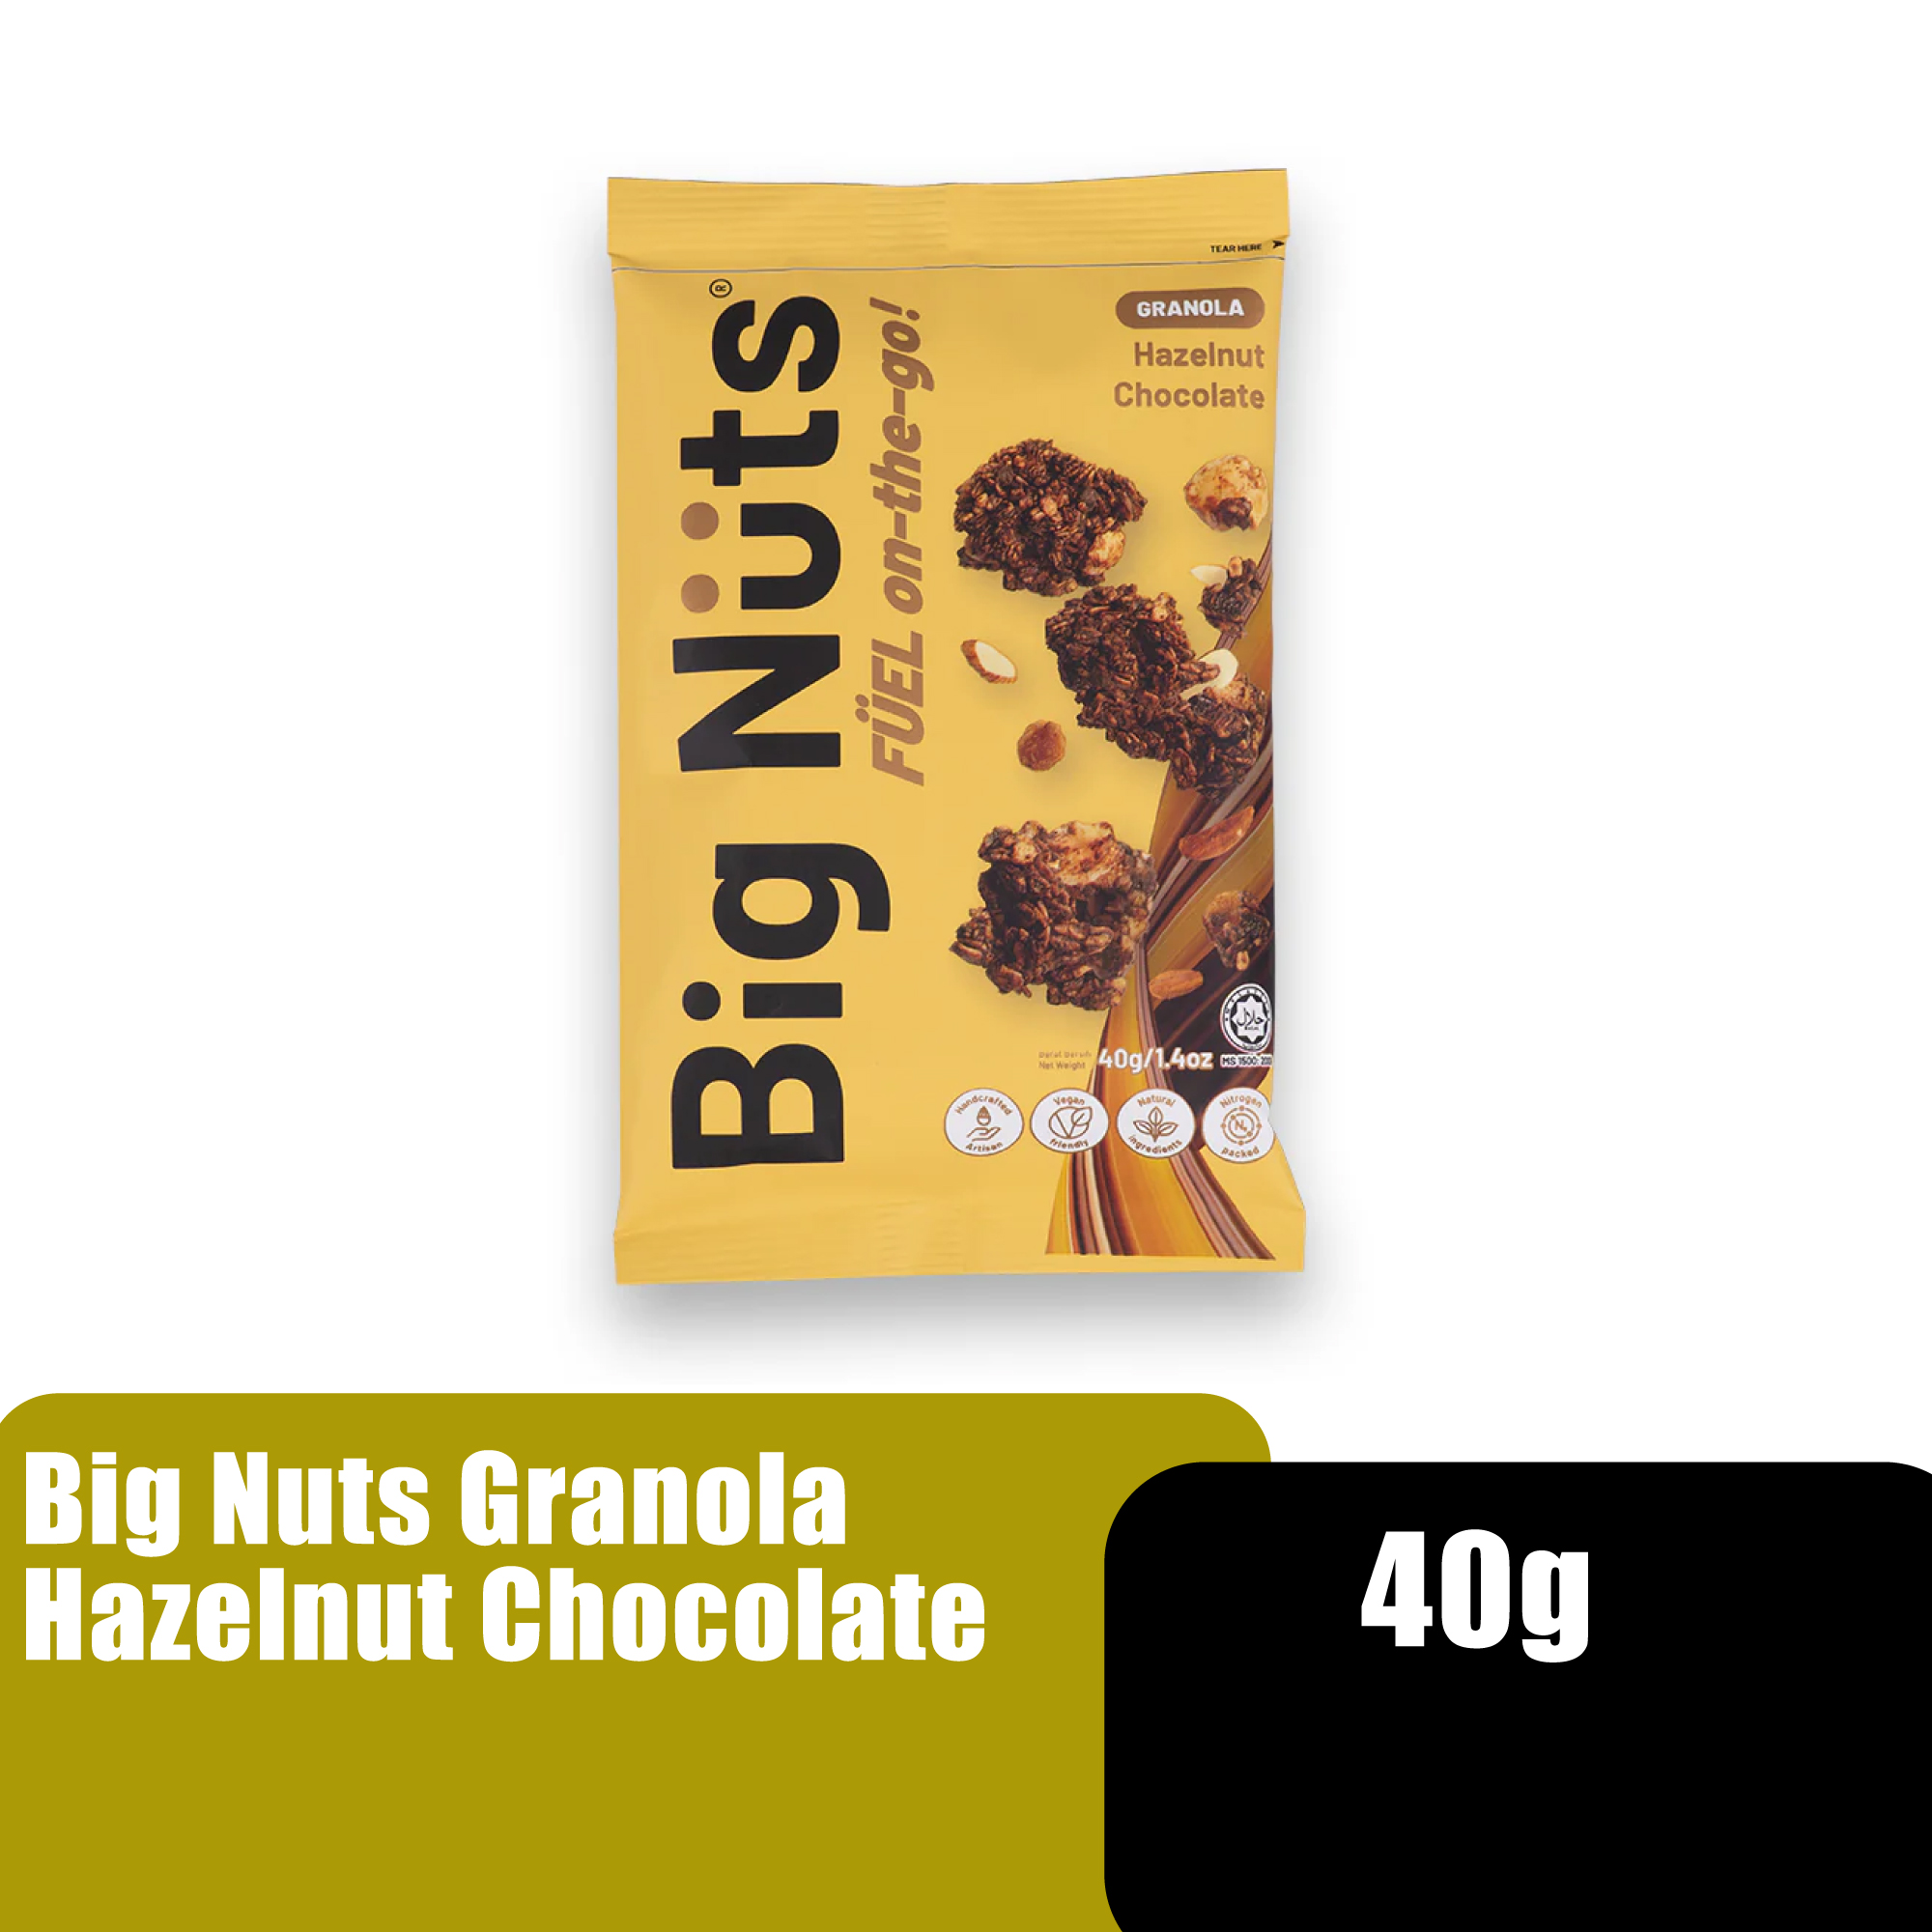 BIG NUTS GRANOLA HAZELNUT CHOCOLATE 40G